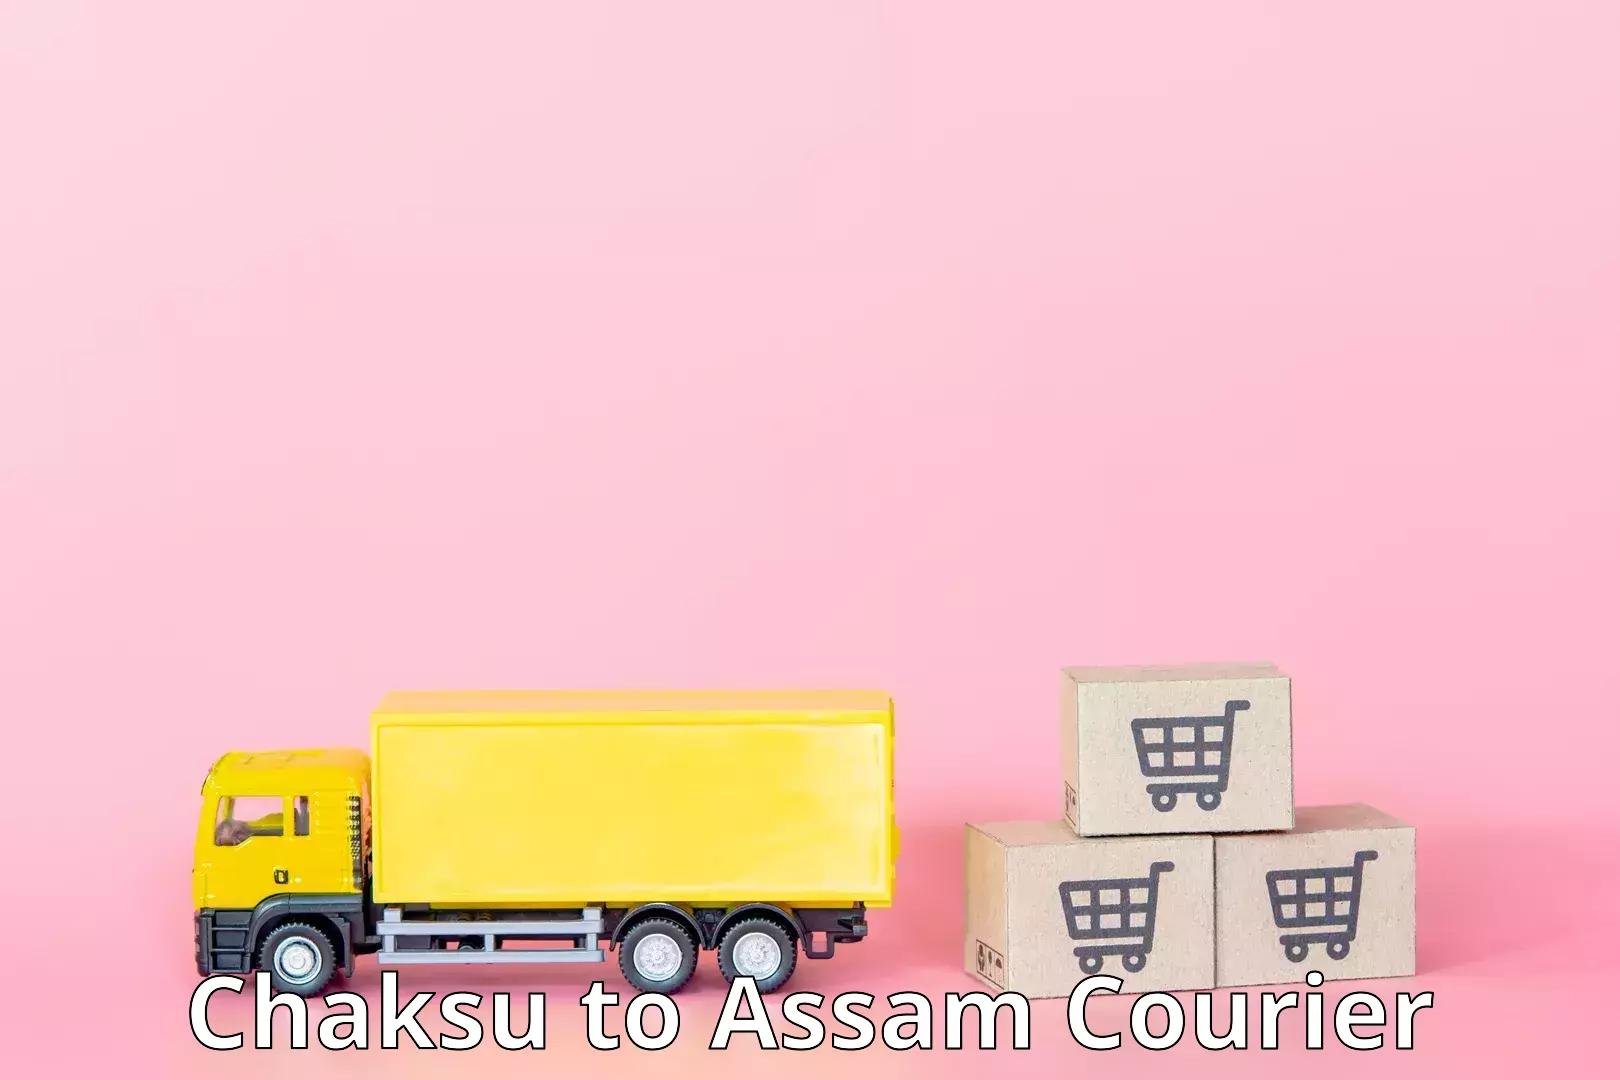 Next-generation courier services Chaksu to Lala Assam